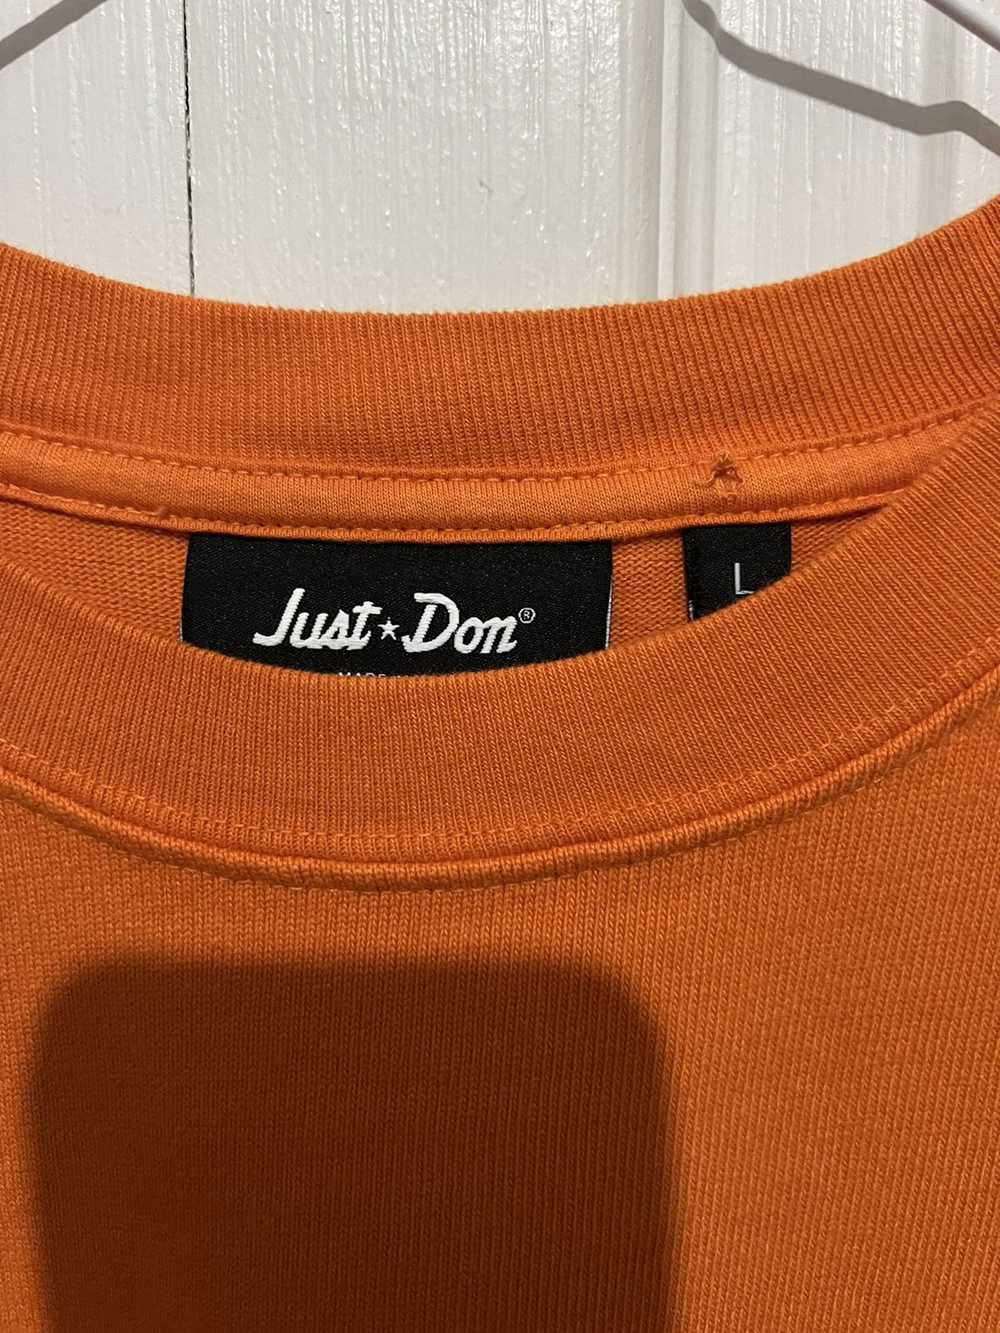 Just Don Just don x Draft kings T shirt - image 3